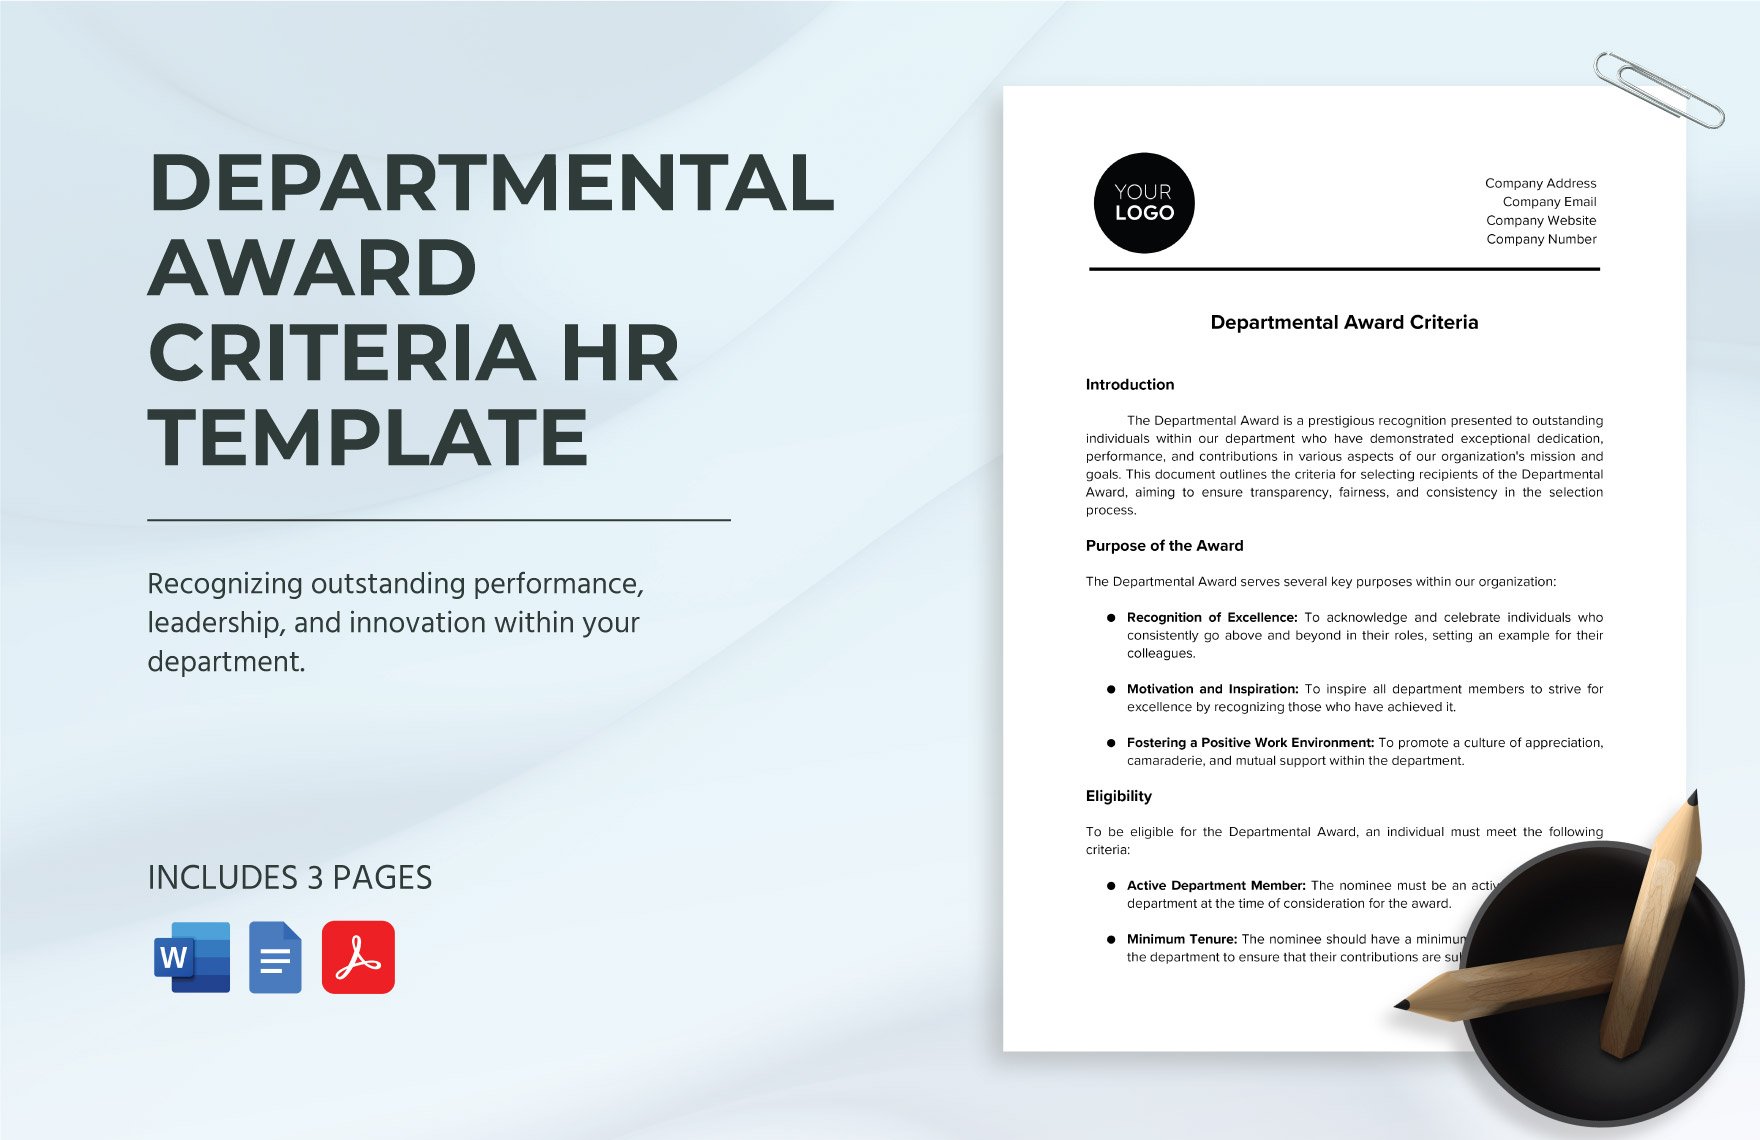 Departmental Award Criteria HR Template